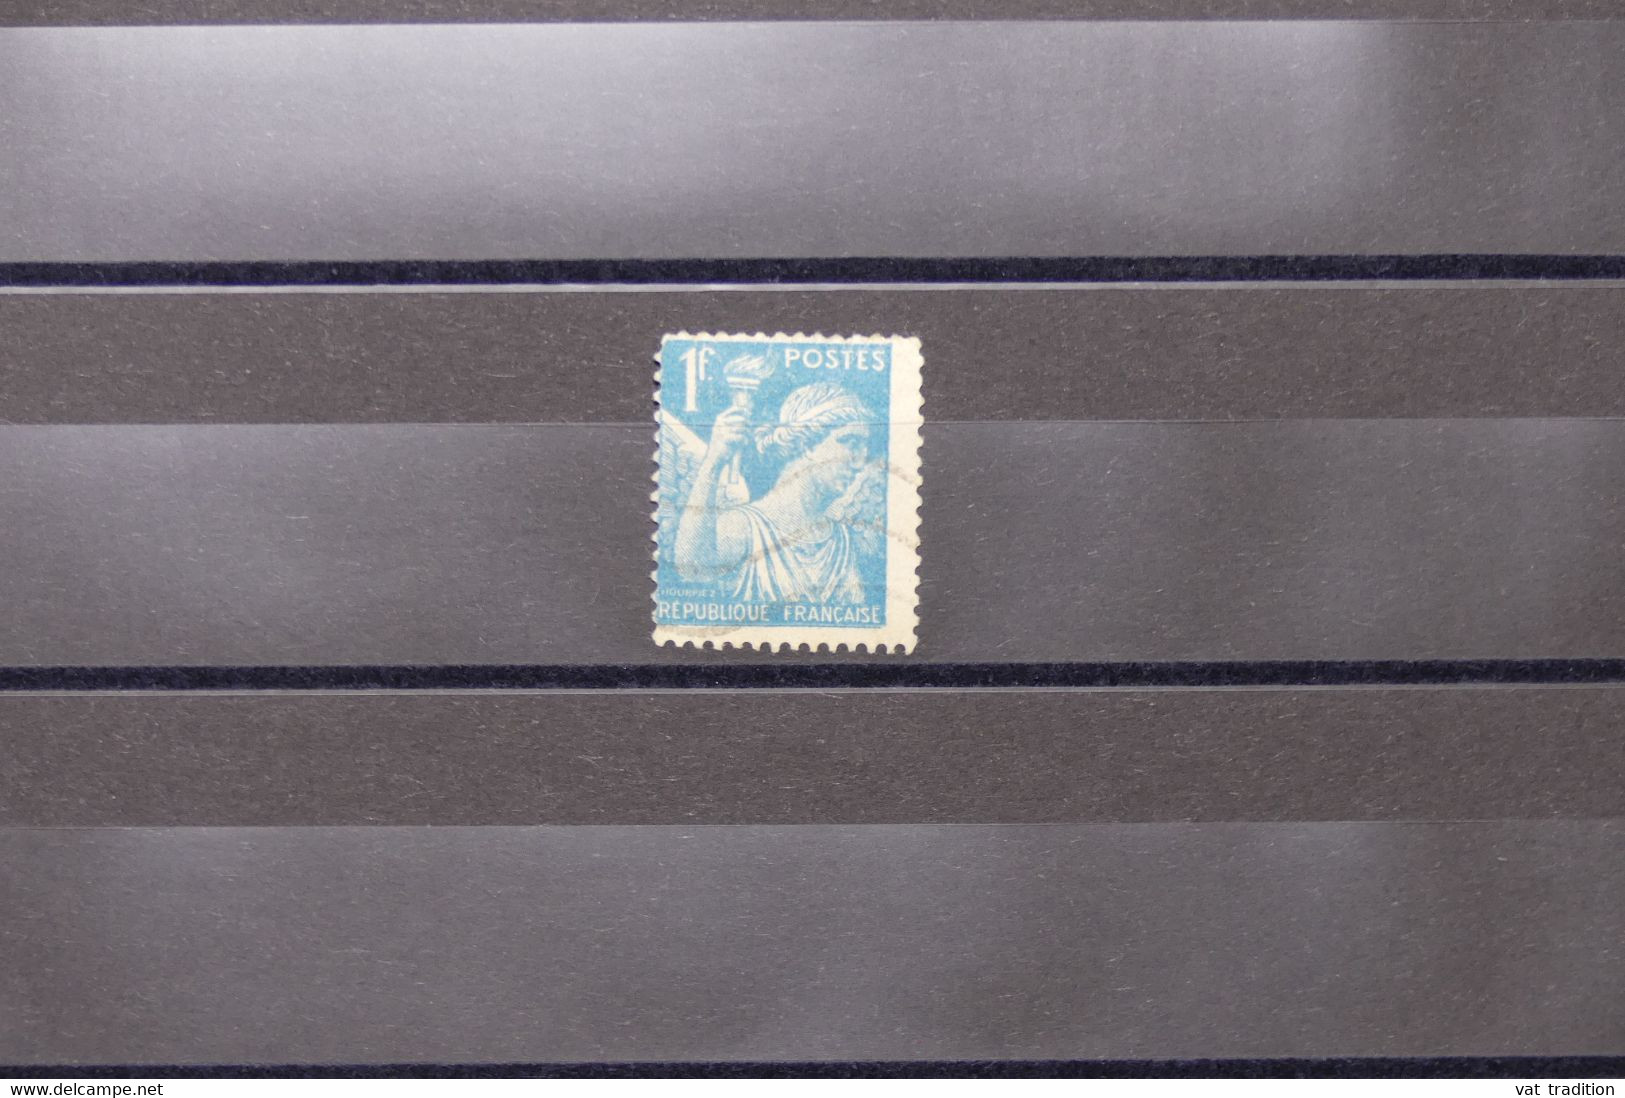 FRANCE - Variété - N° Yvert 650 - Type Iris - Papier Pelure - Oblitéré - L 74054 - Usati